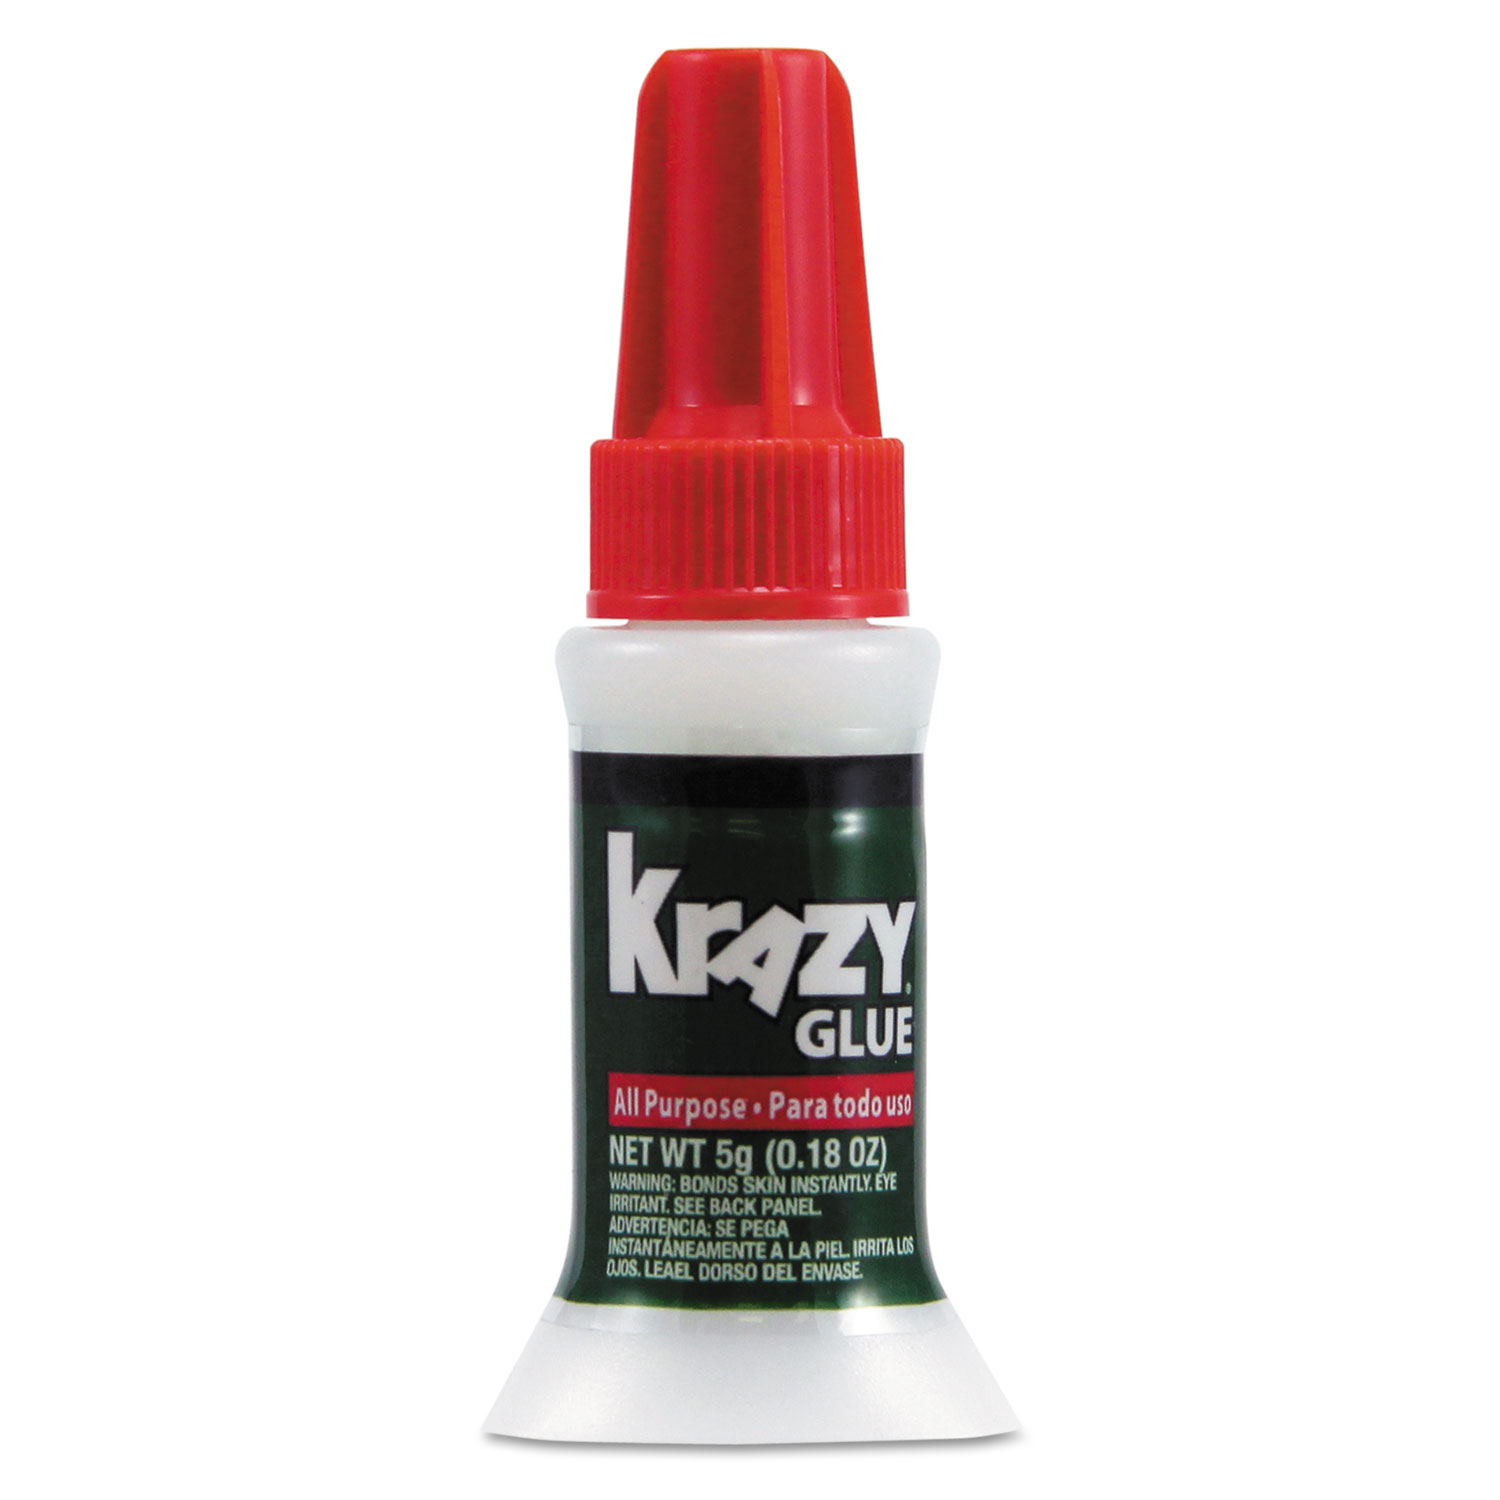  Krazy Glue KG92548R All Purpose Brush-On Krazy Glue, 0.17 oz, Dries Clear (EPIKG92548R) 